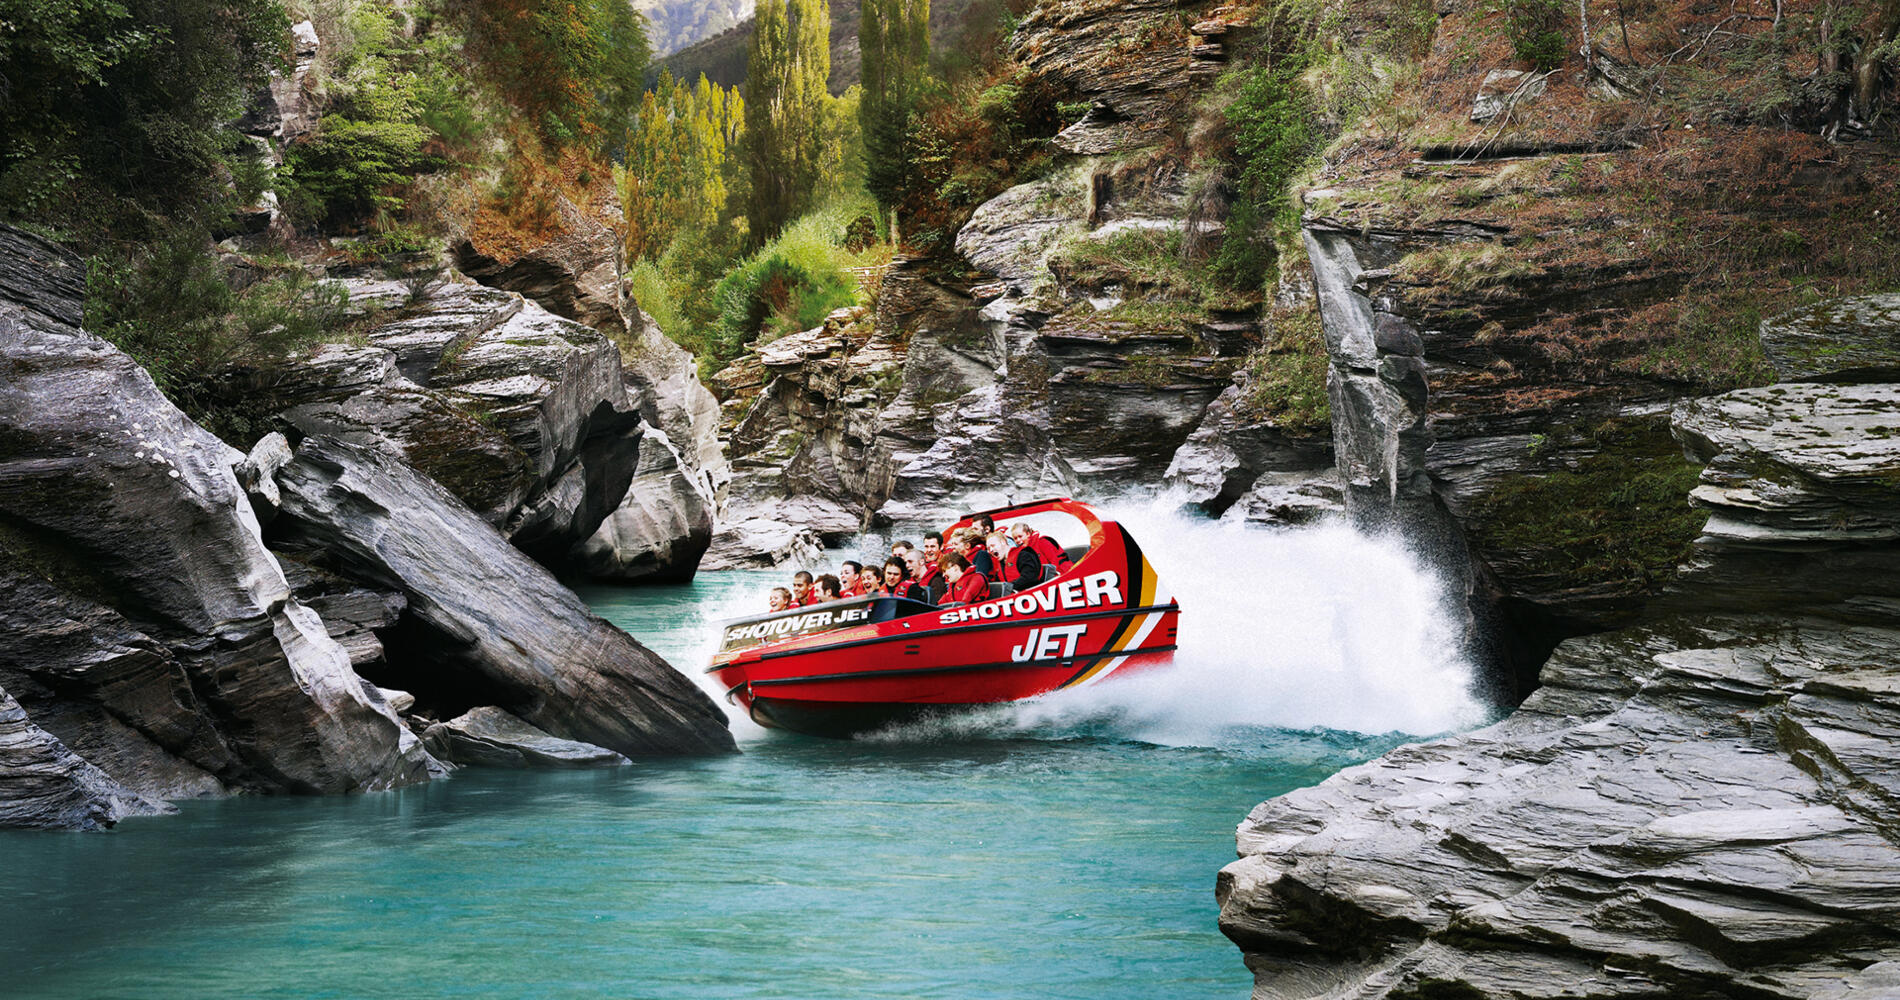 Made in new zealand. Новая Зеландия – Шотовер-Джет. Природа новой Зеландии река Шотовер. Новая Зеландия лодка. Шотовер(Shotover катер.